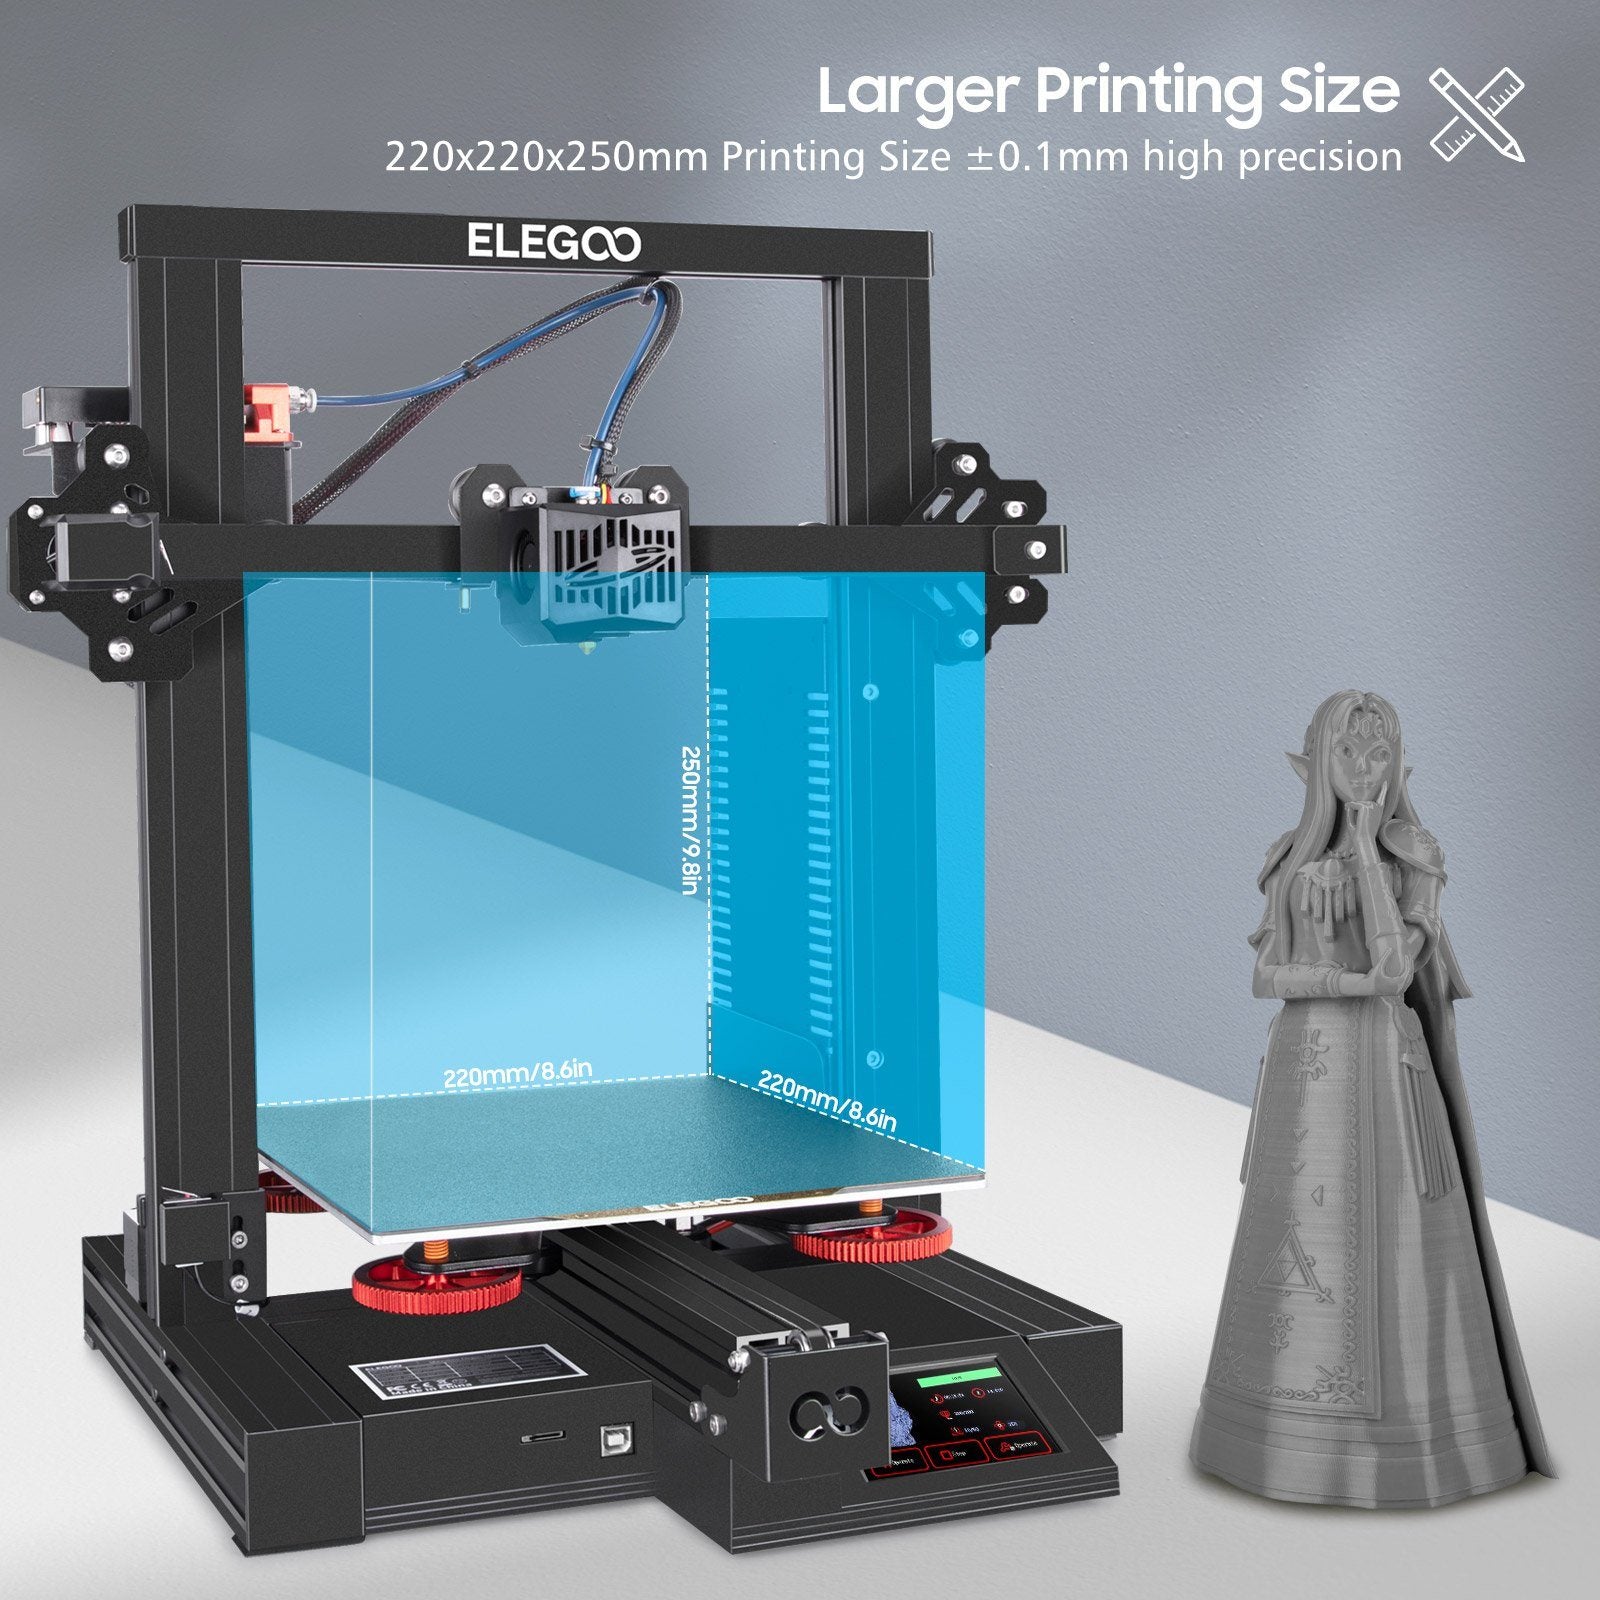 【NEW】ELEGOO Neptune 2S FDM 3D Printer with larger printer size 220*220